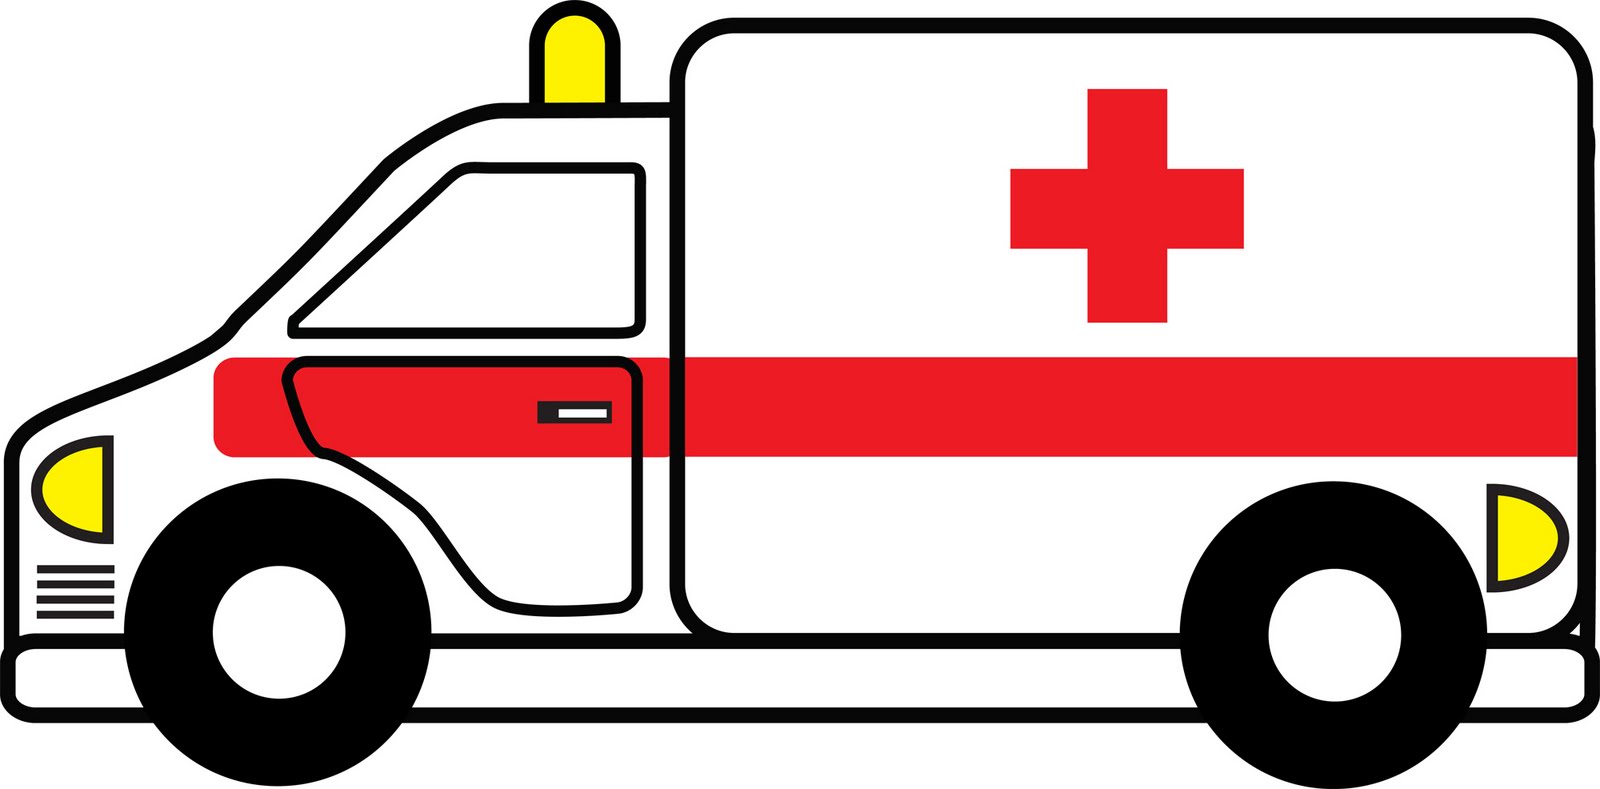 99 Gambar Animasi Mobil Ambulance | Cikimm.com